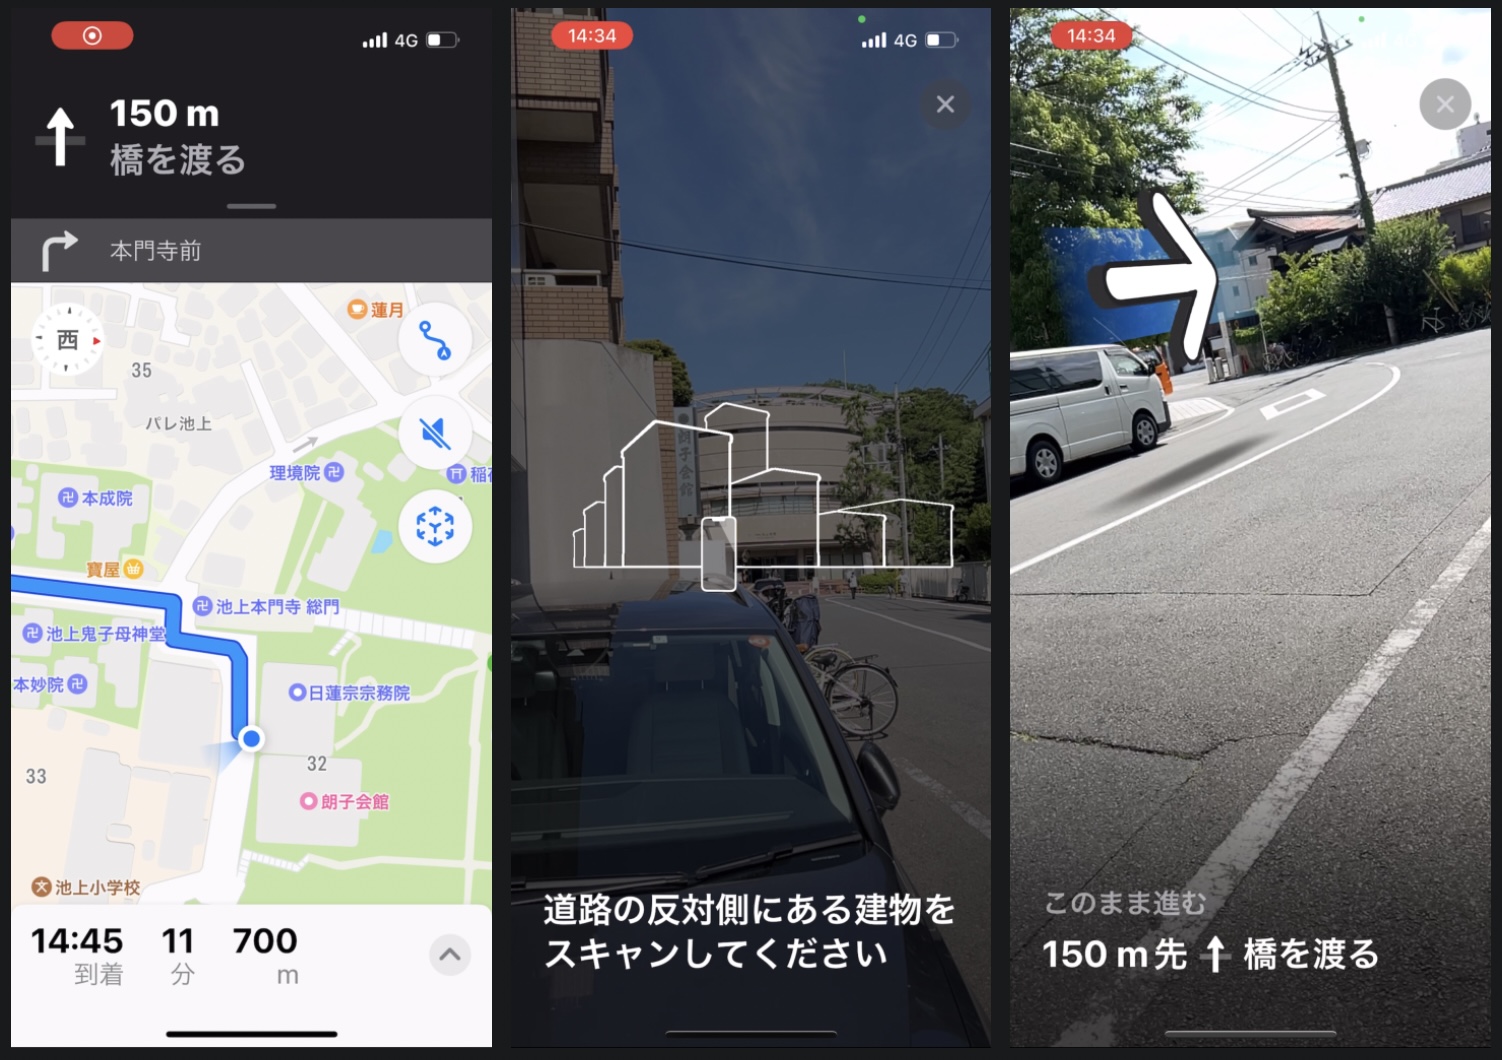 Apple Maps Gains AR Walking Directions in Tokyo, Japan